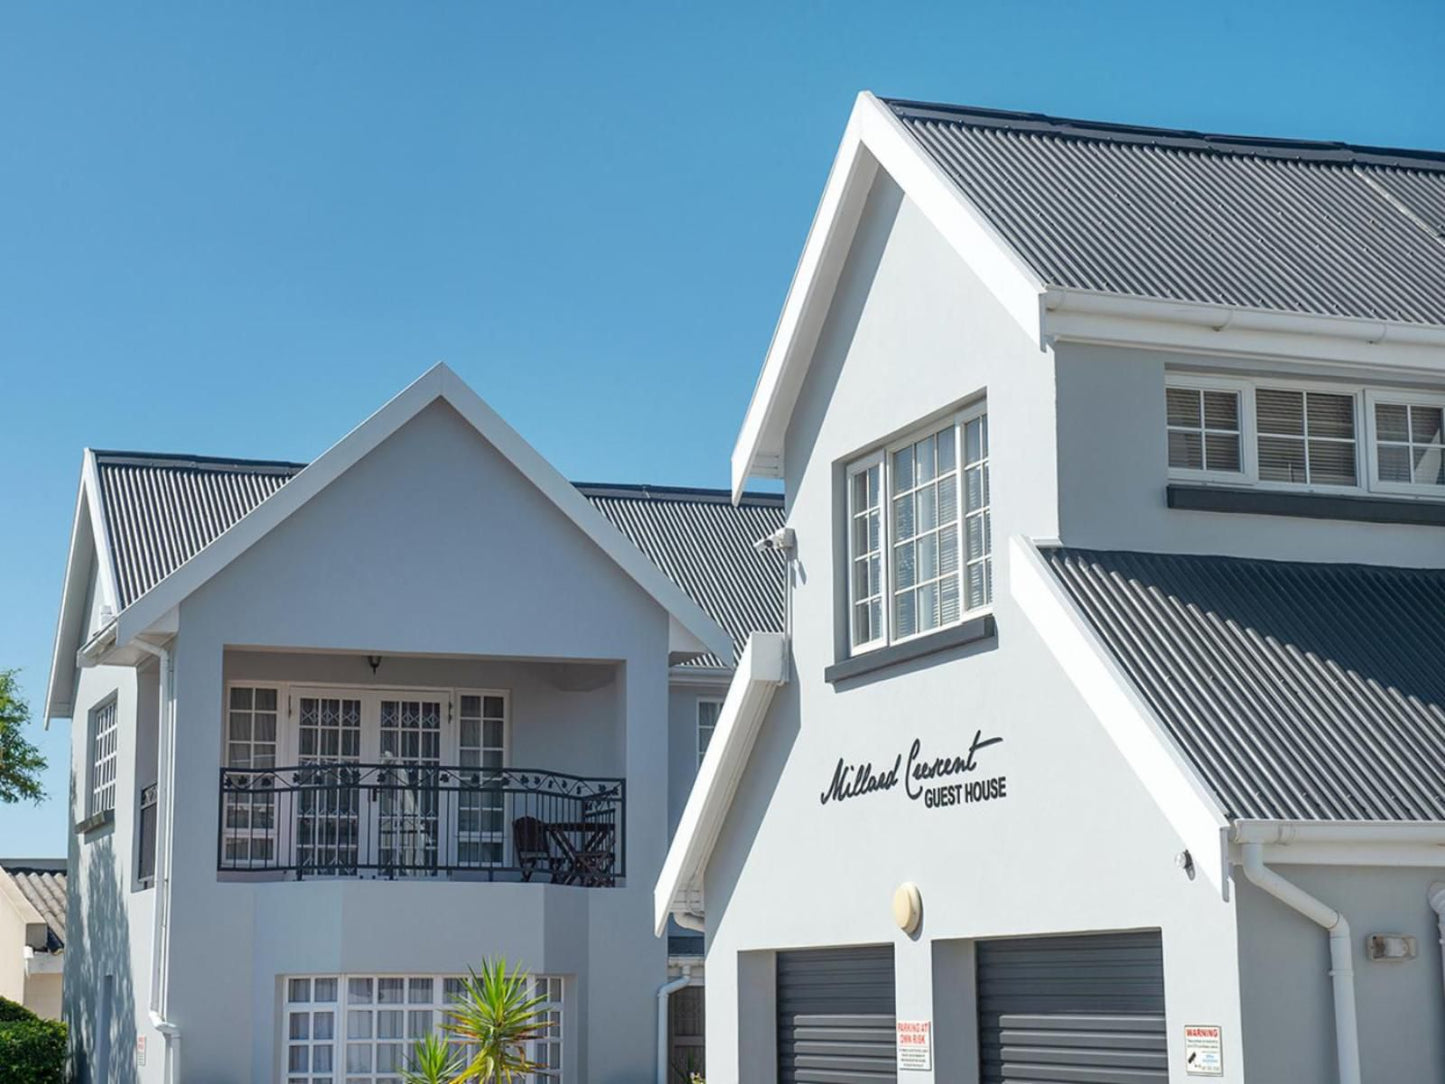 Millard Crescent Guest House Summerstrand Port Elizabeth Eastern Cape South Africa Building, Architecture, House